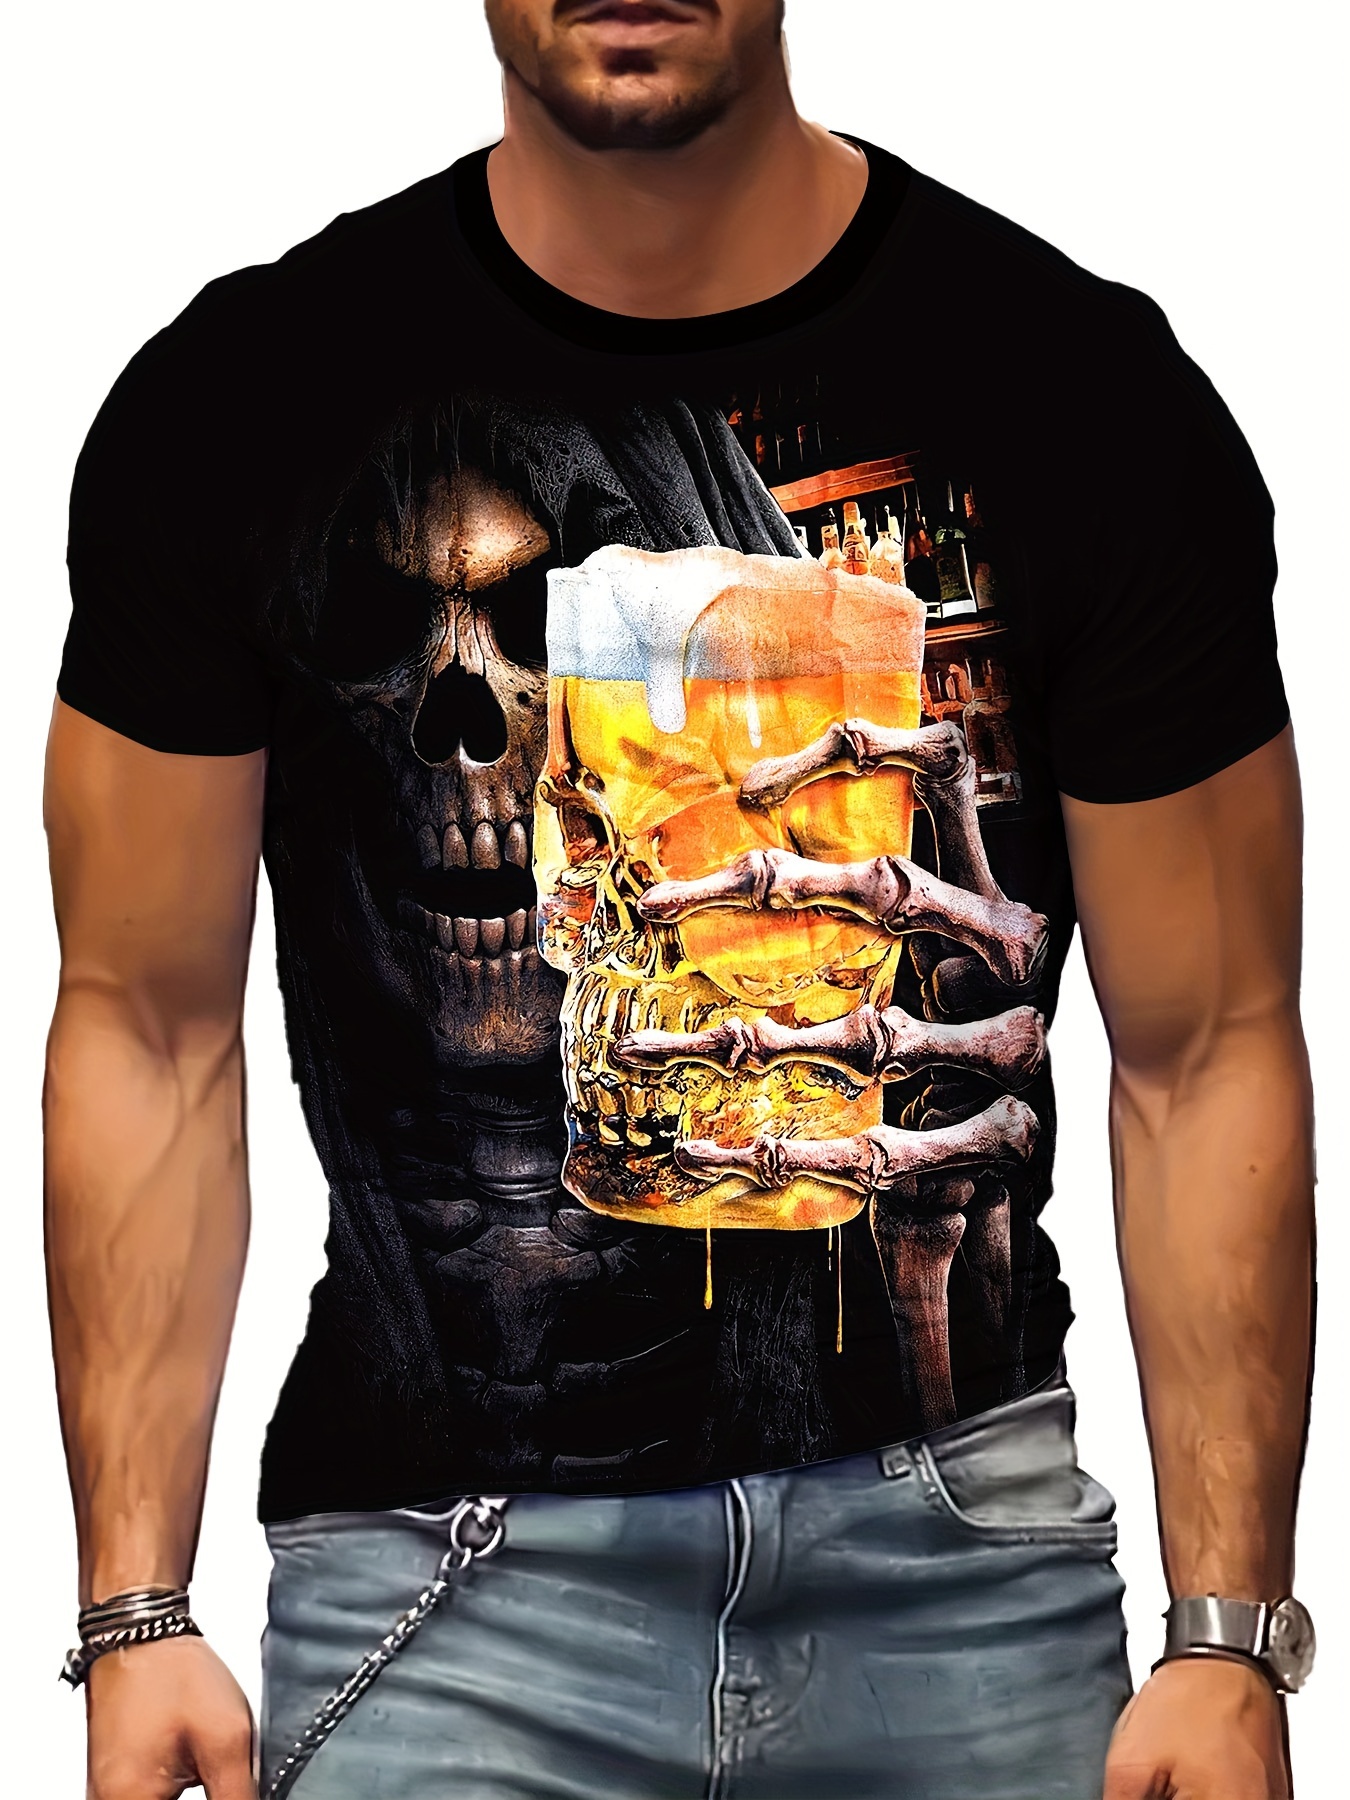 amidoa Mens Shirts Casual Stylish Short Sleeve 3D Beer Graphic